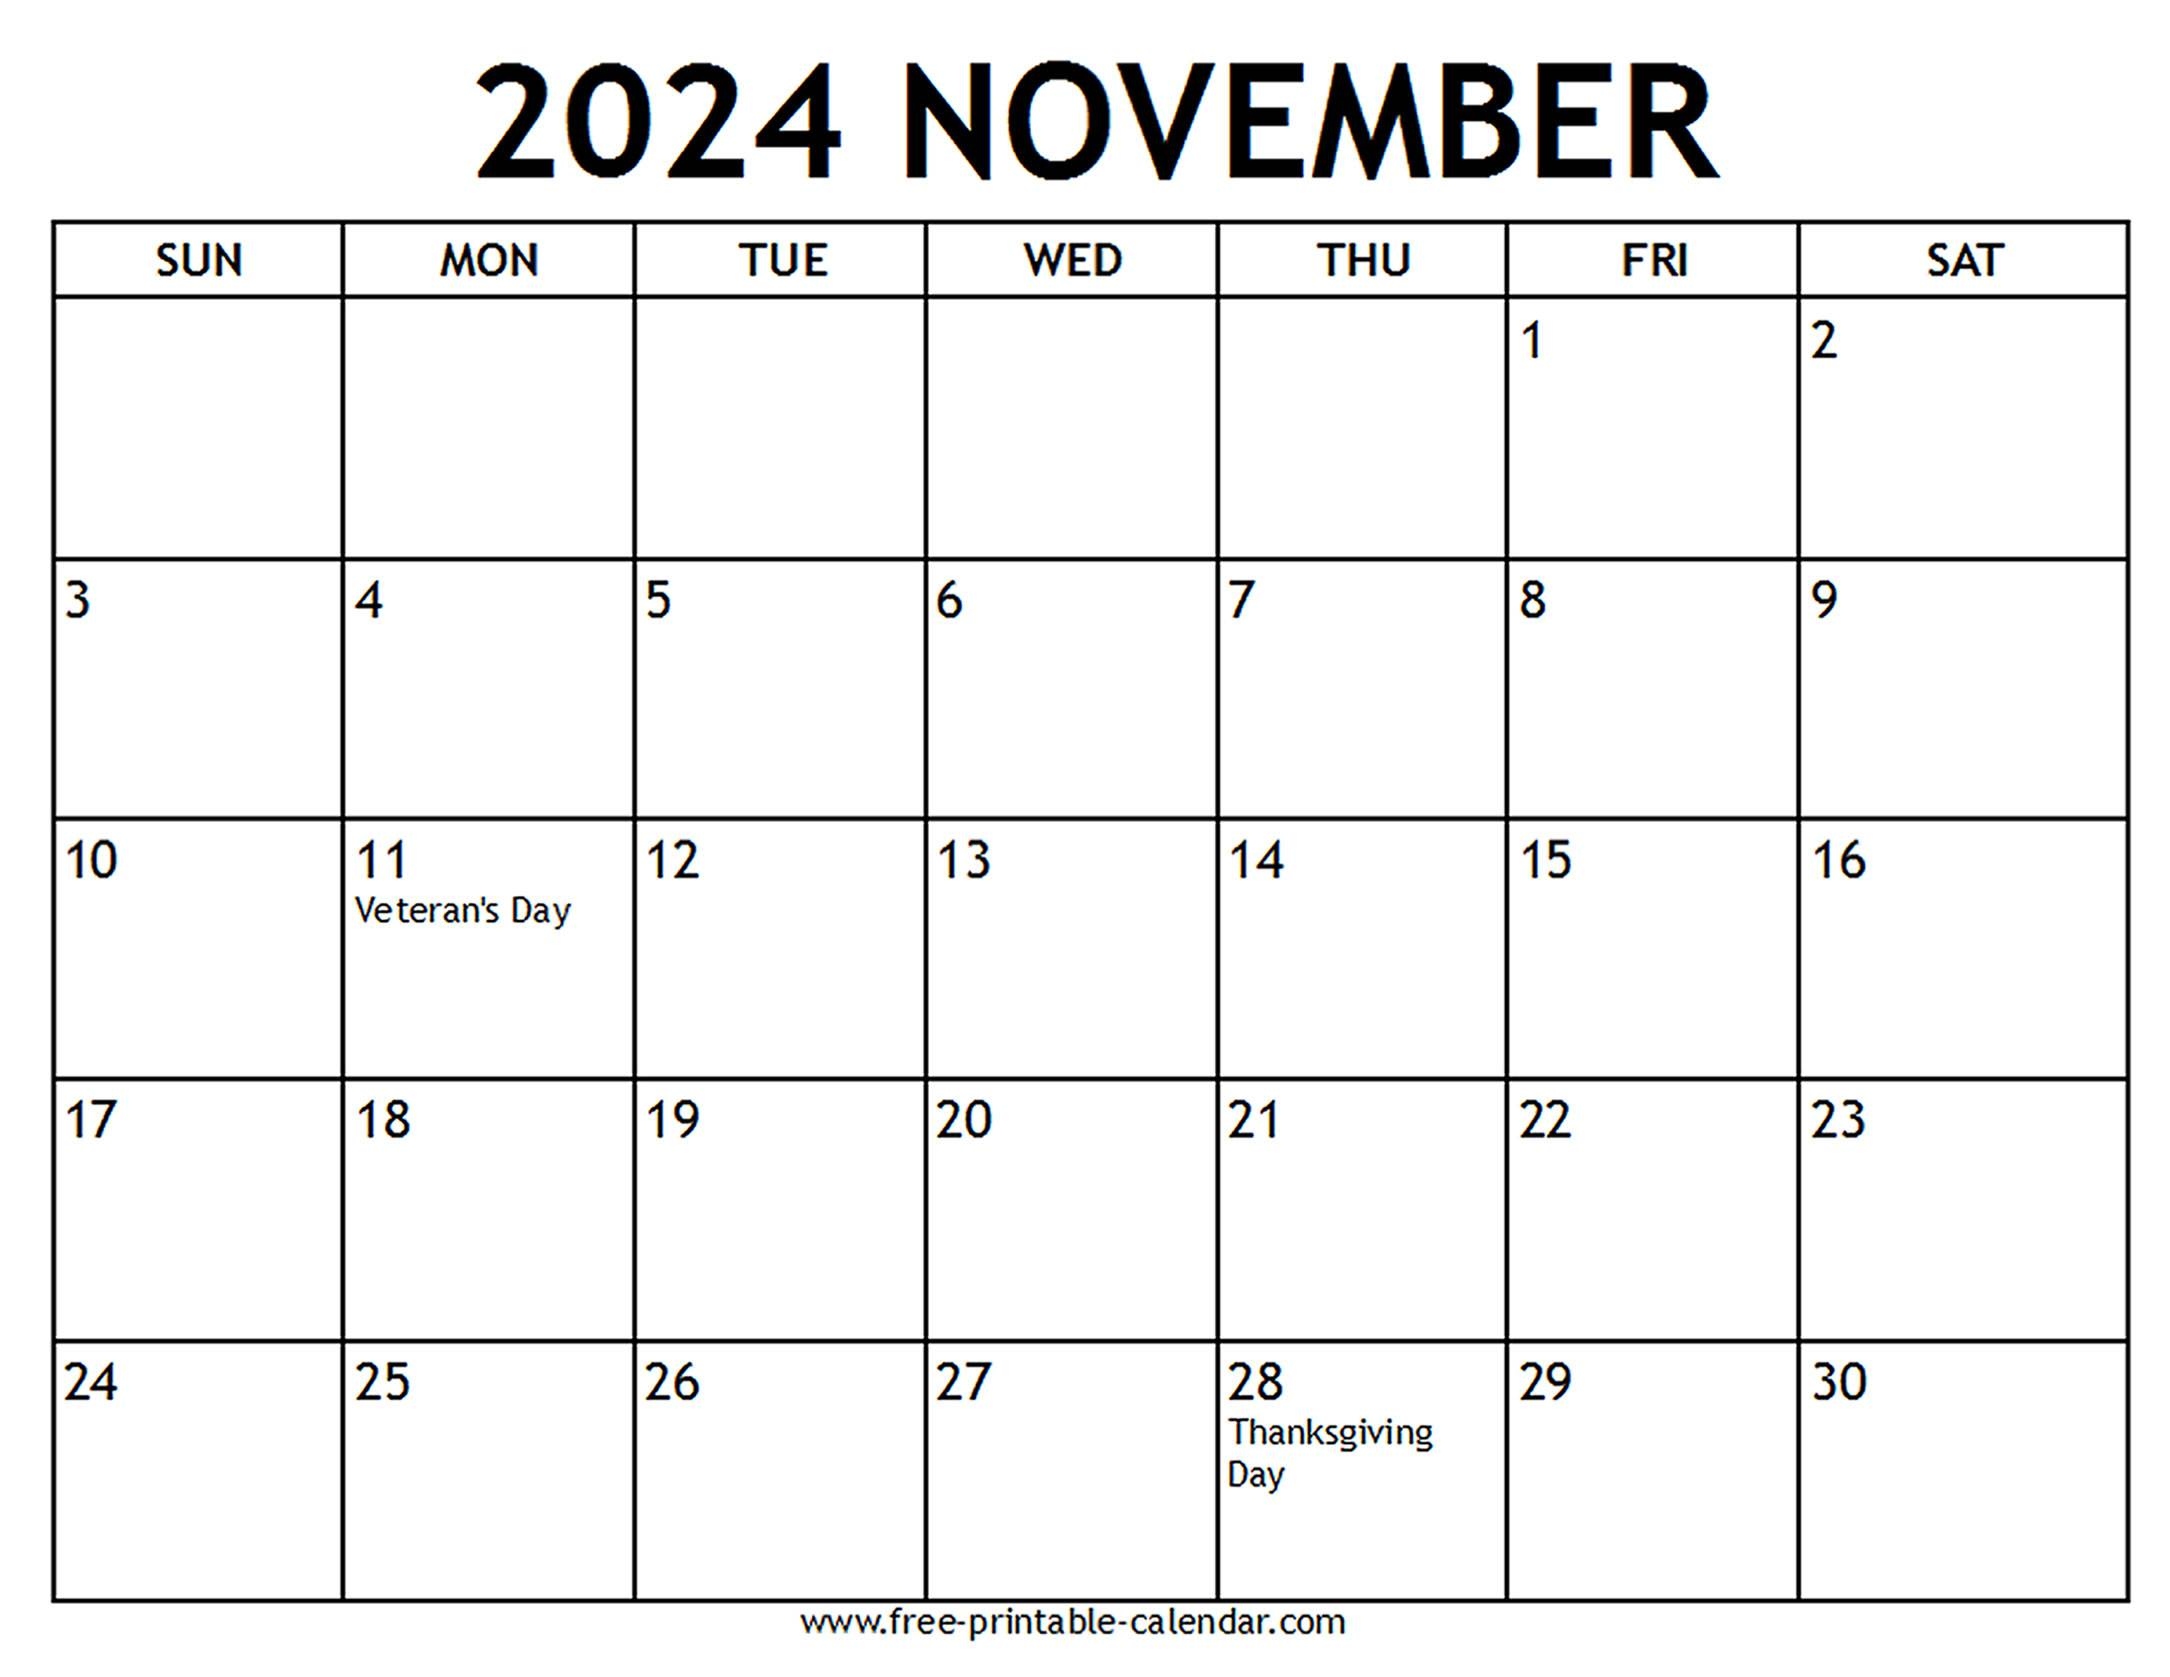 November 2024 Calendar Us Holidays - Free-Printable-Calendar with Free Printable Blank Calendar November 2024